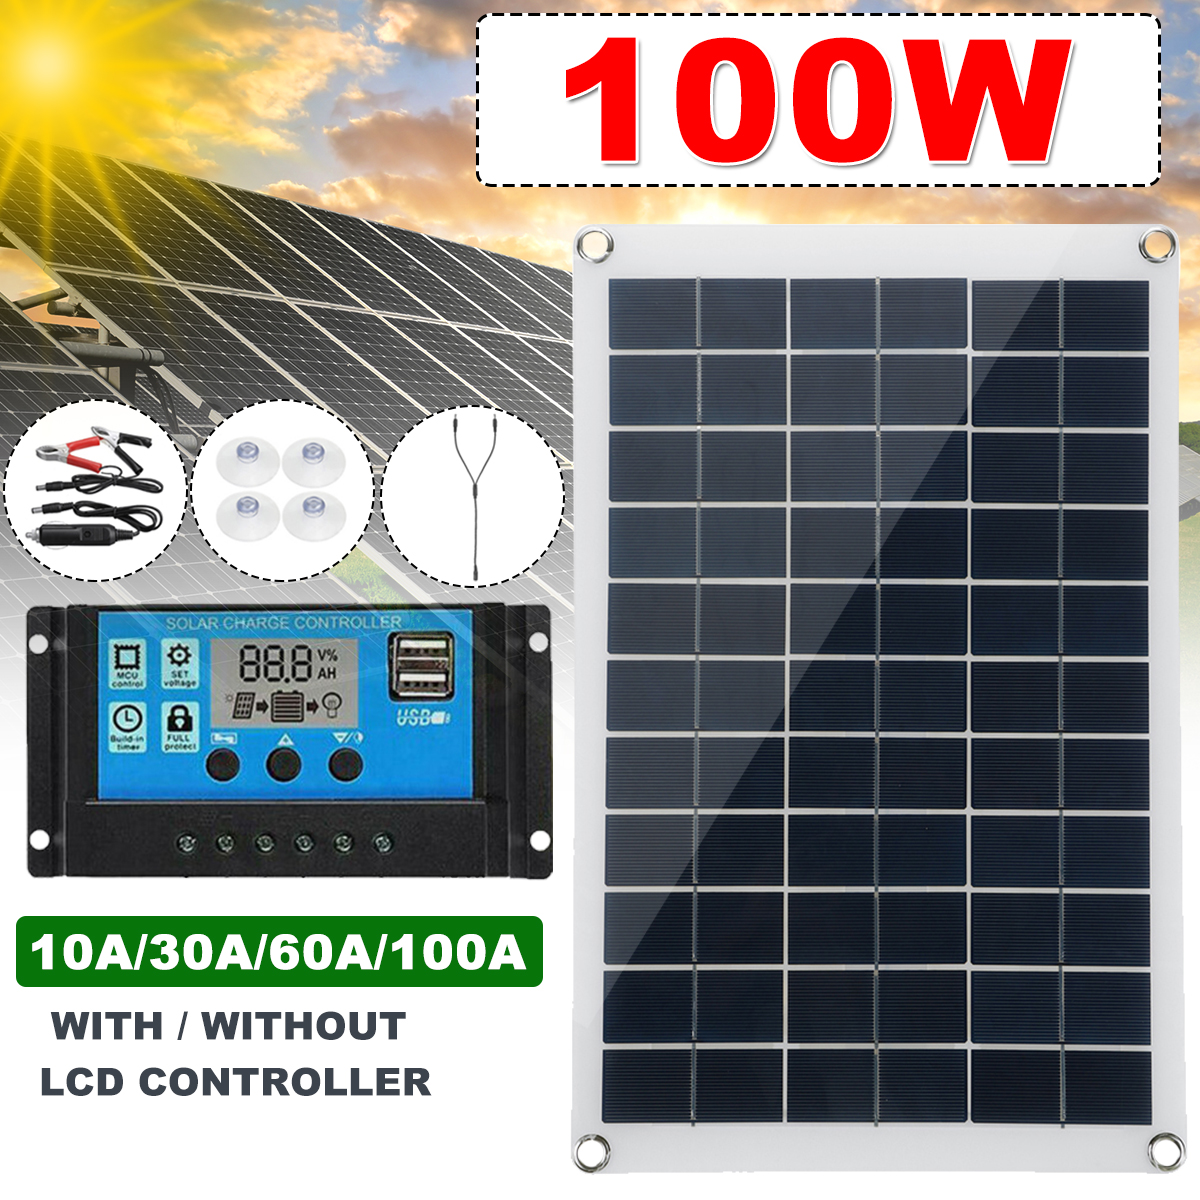 Max-100W-Protable-Solar-Panel-Kit-Dual-DC-USB-Charger-Kit-Single-Crystal-Semi-flexible-Solar-Power-P-1827862-3